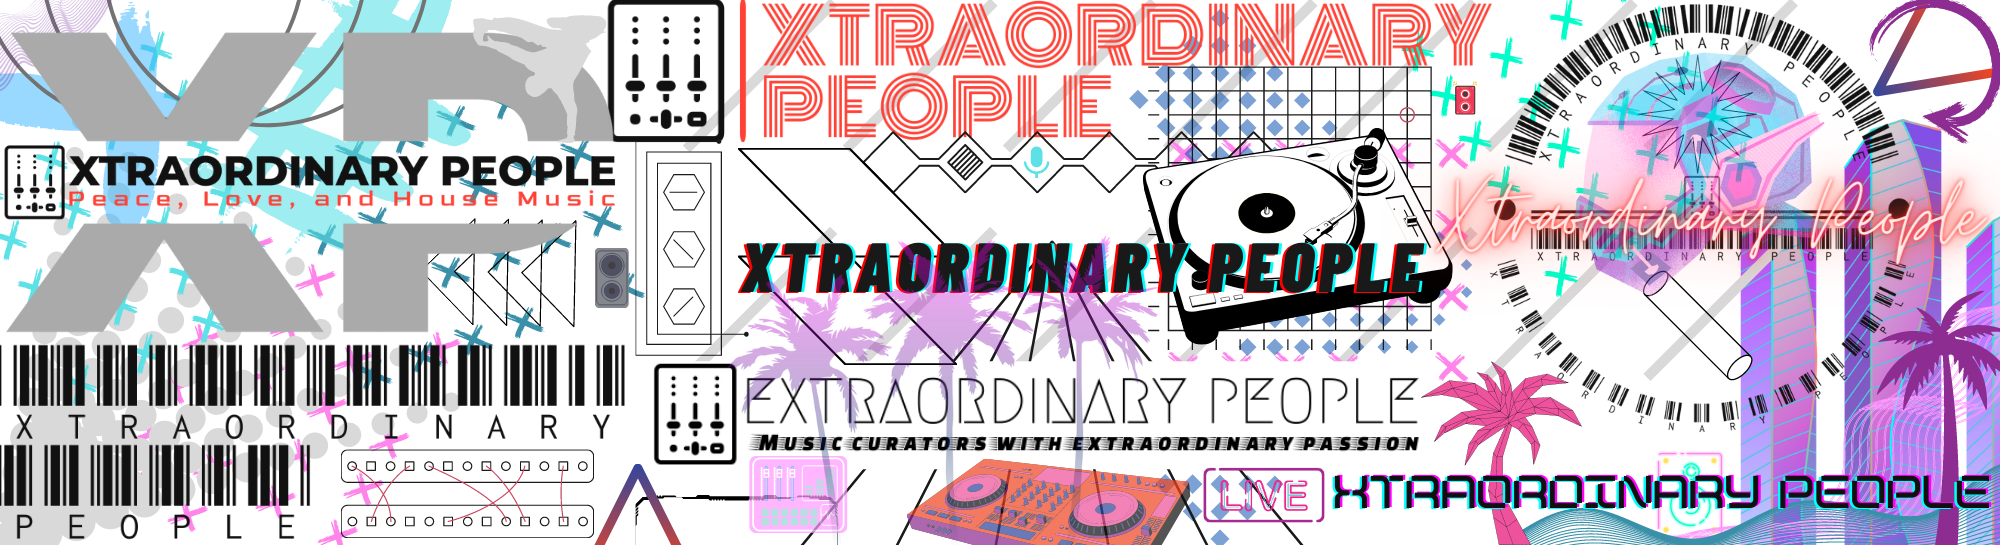 Xtraordinary People